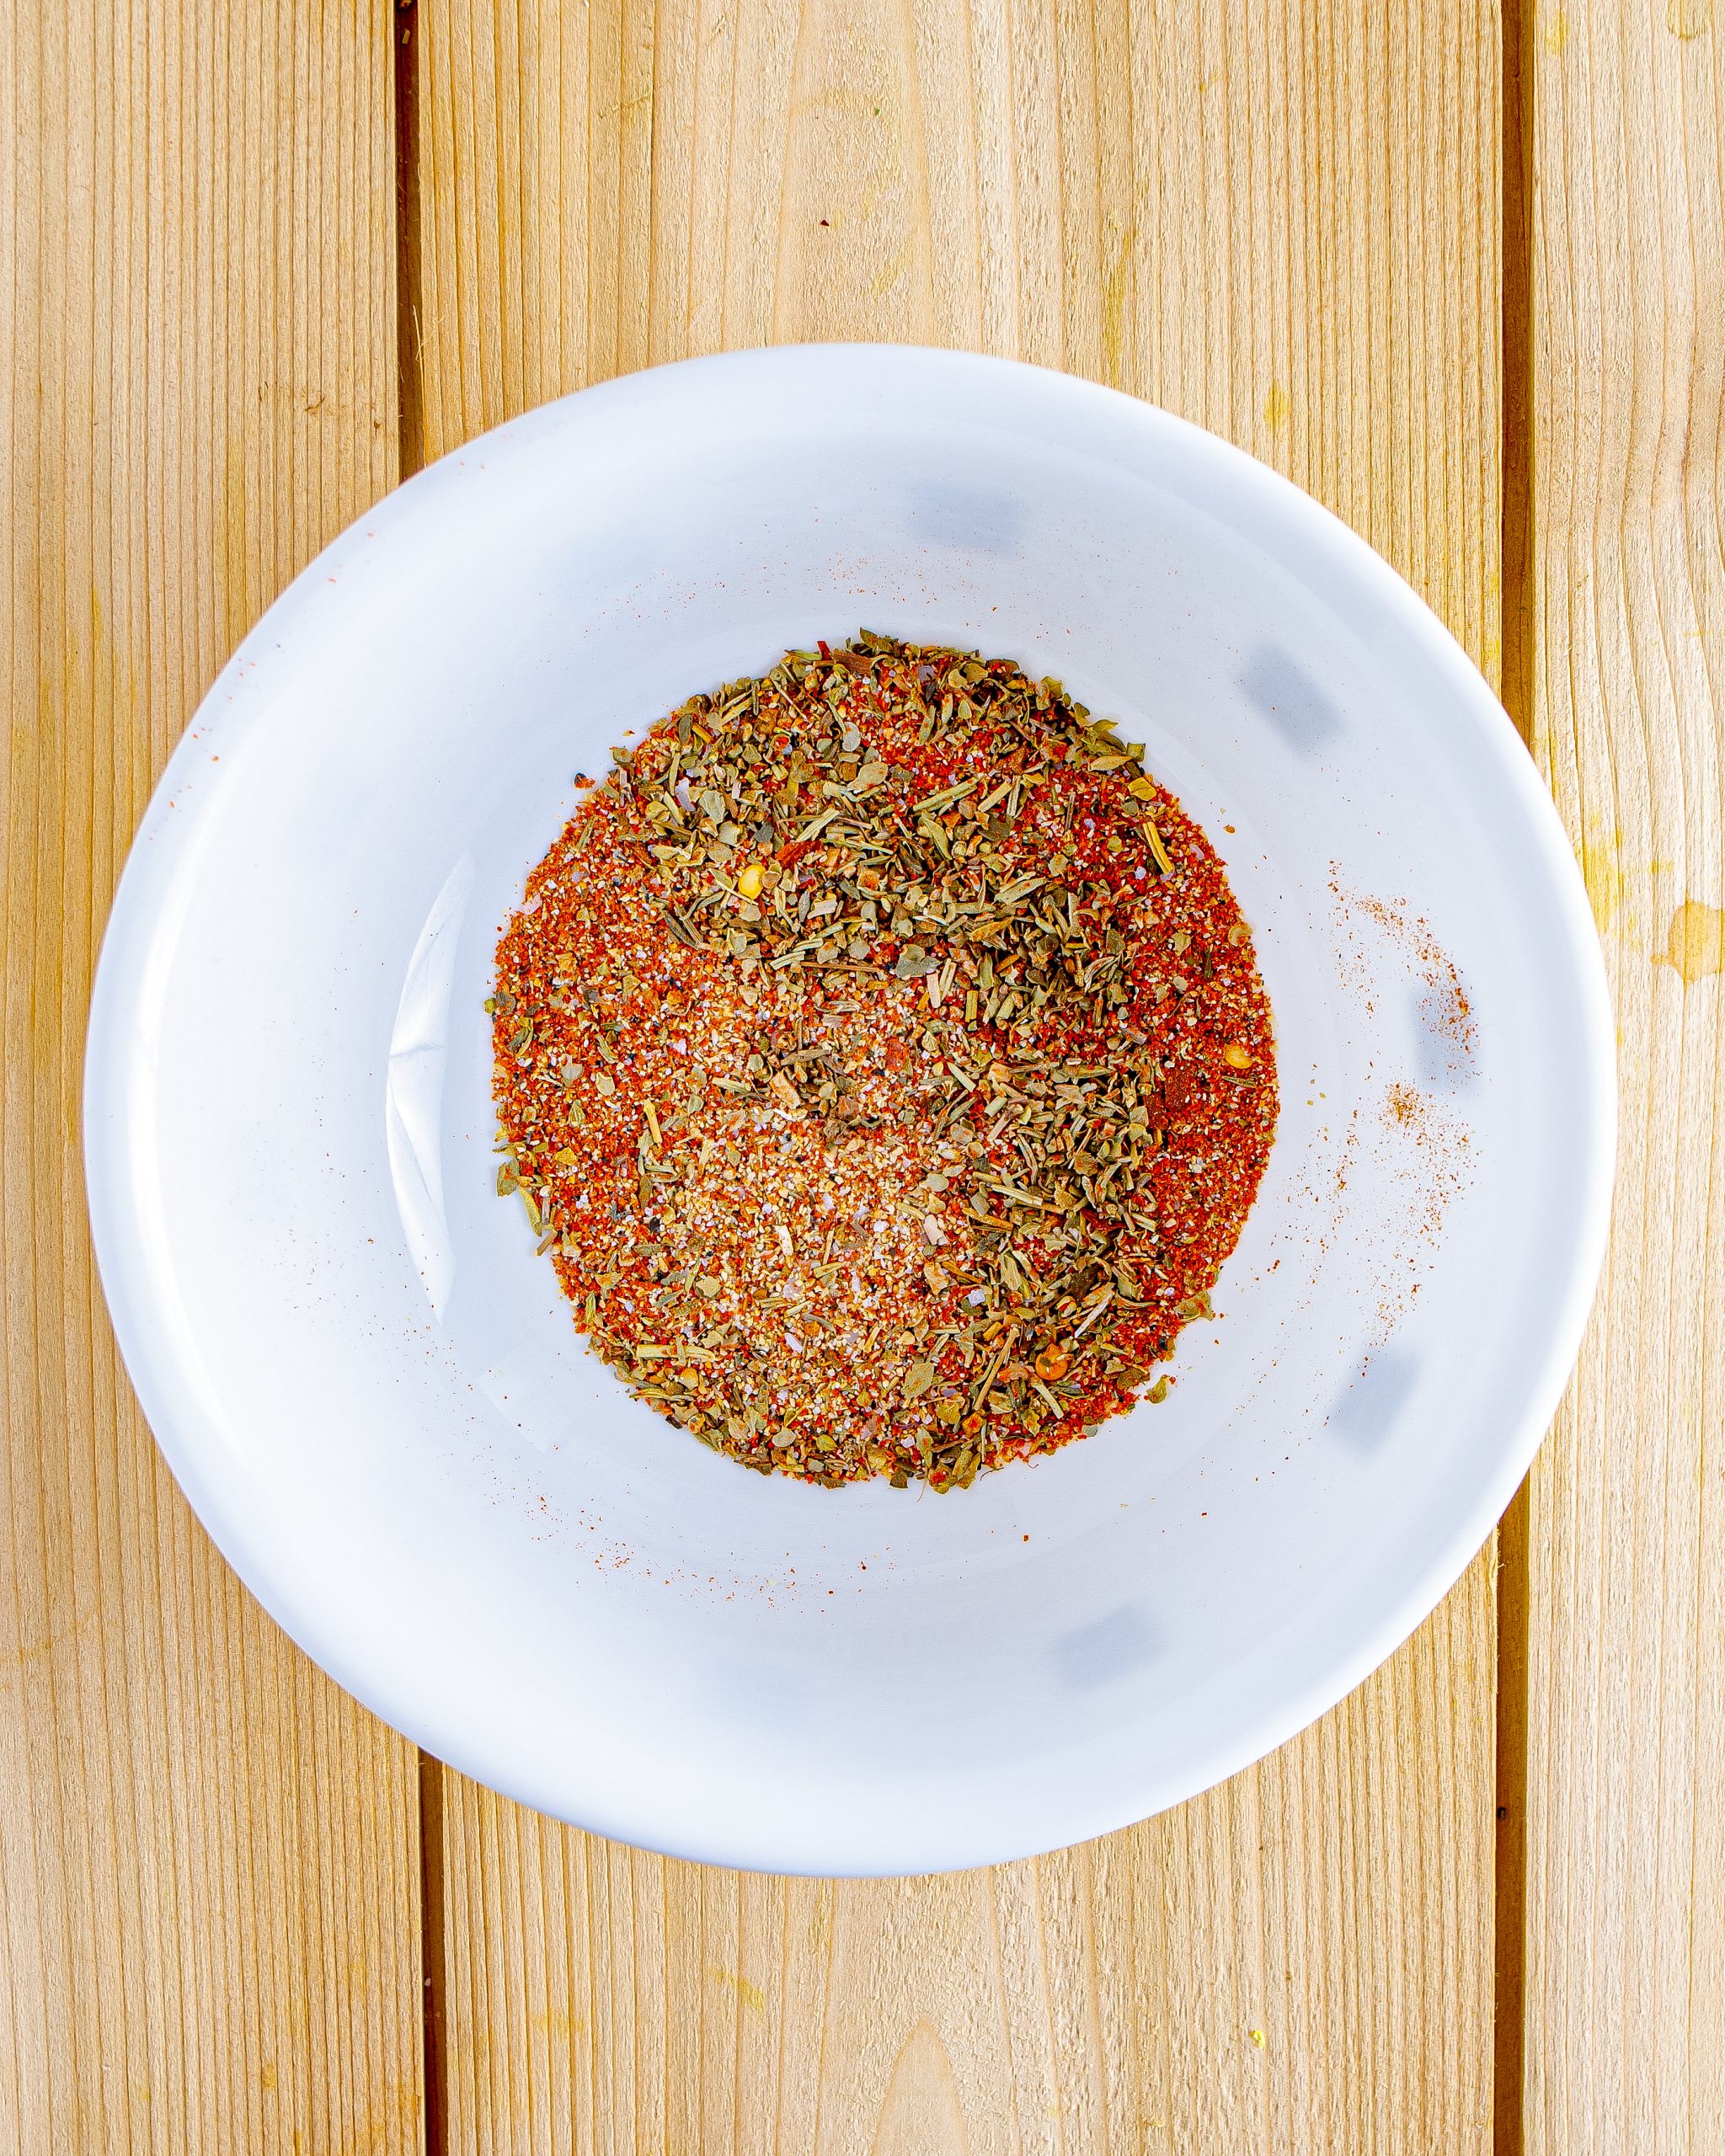 In a small bowl, combine the Italian seasoning, garlic powder, paprika, salt, and pepper.